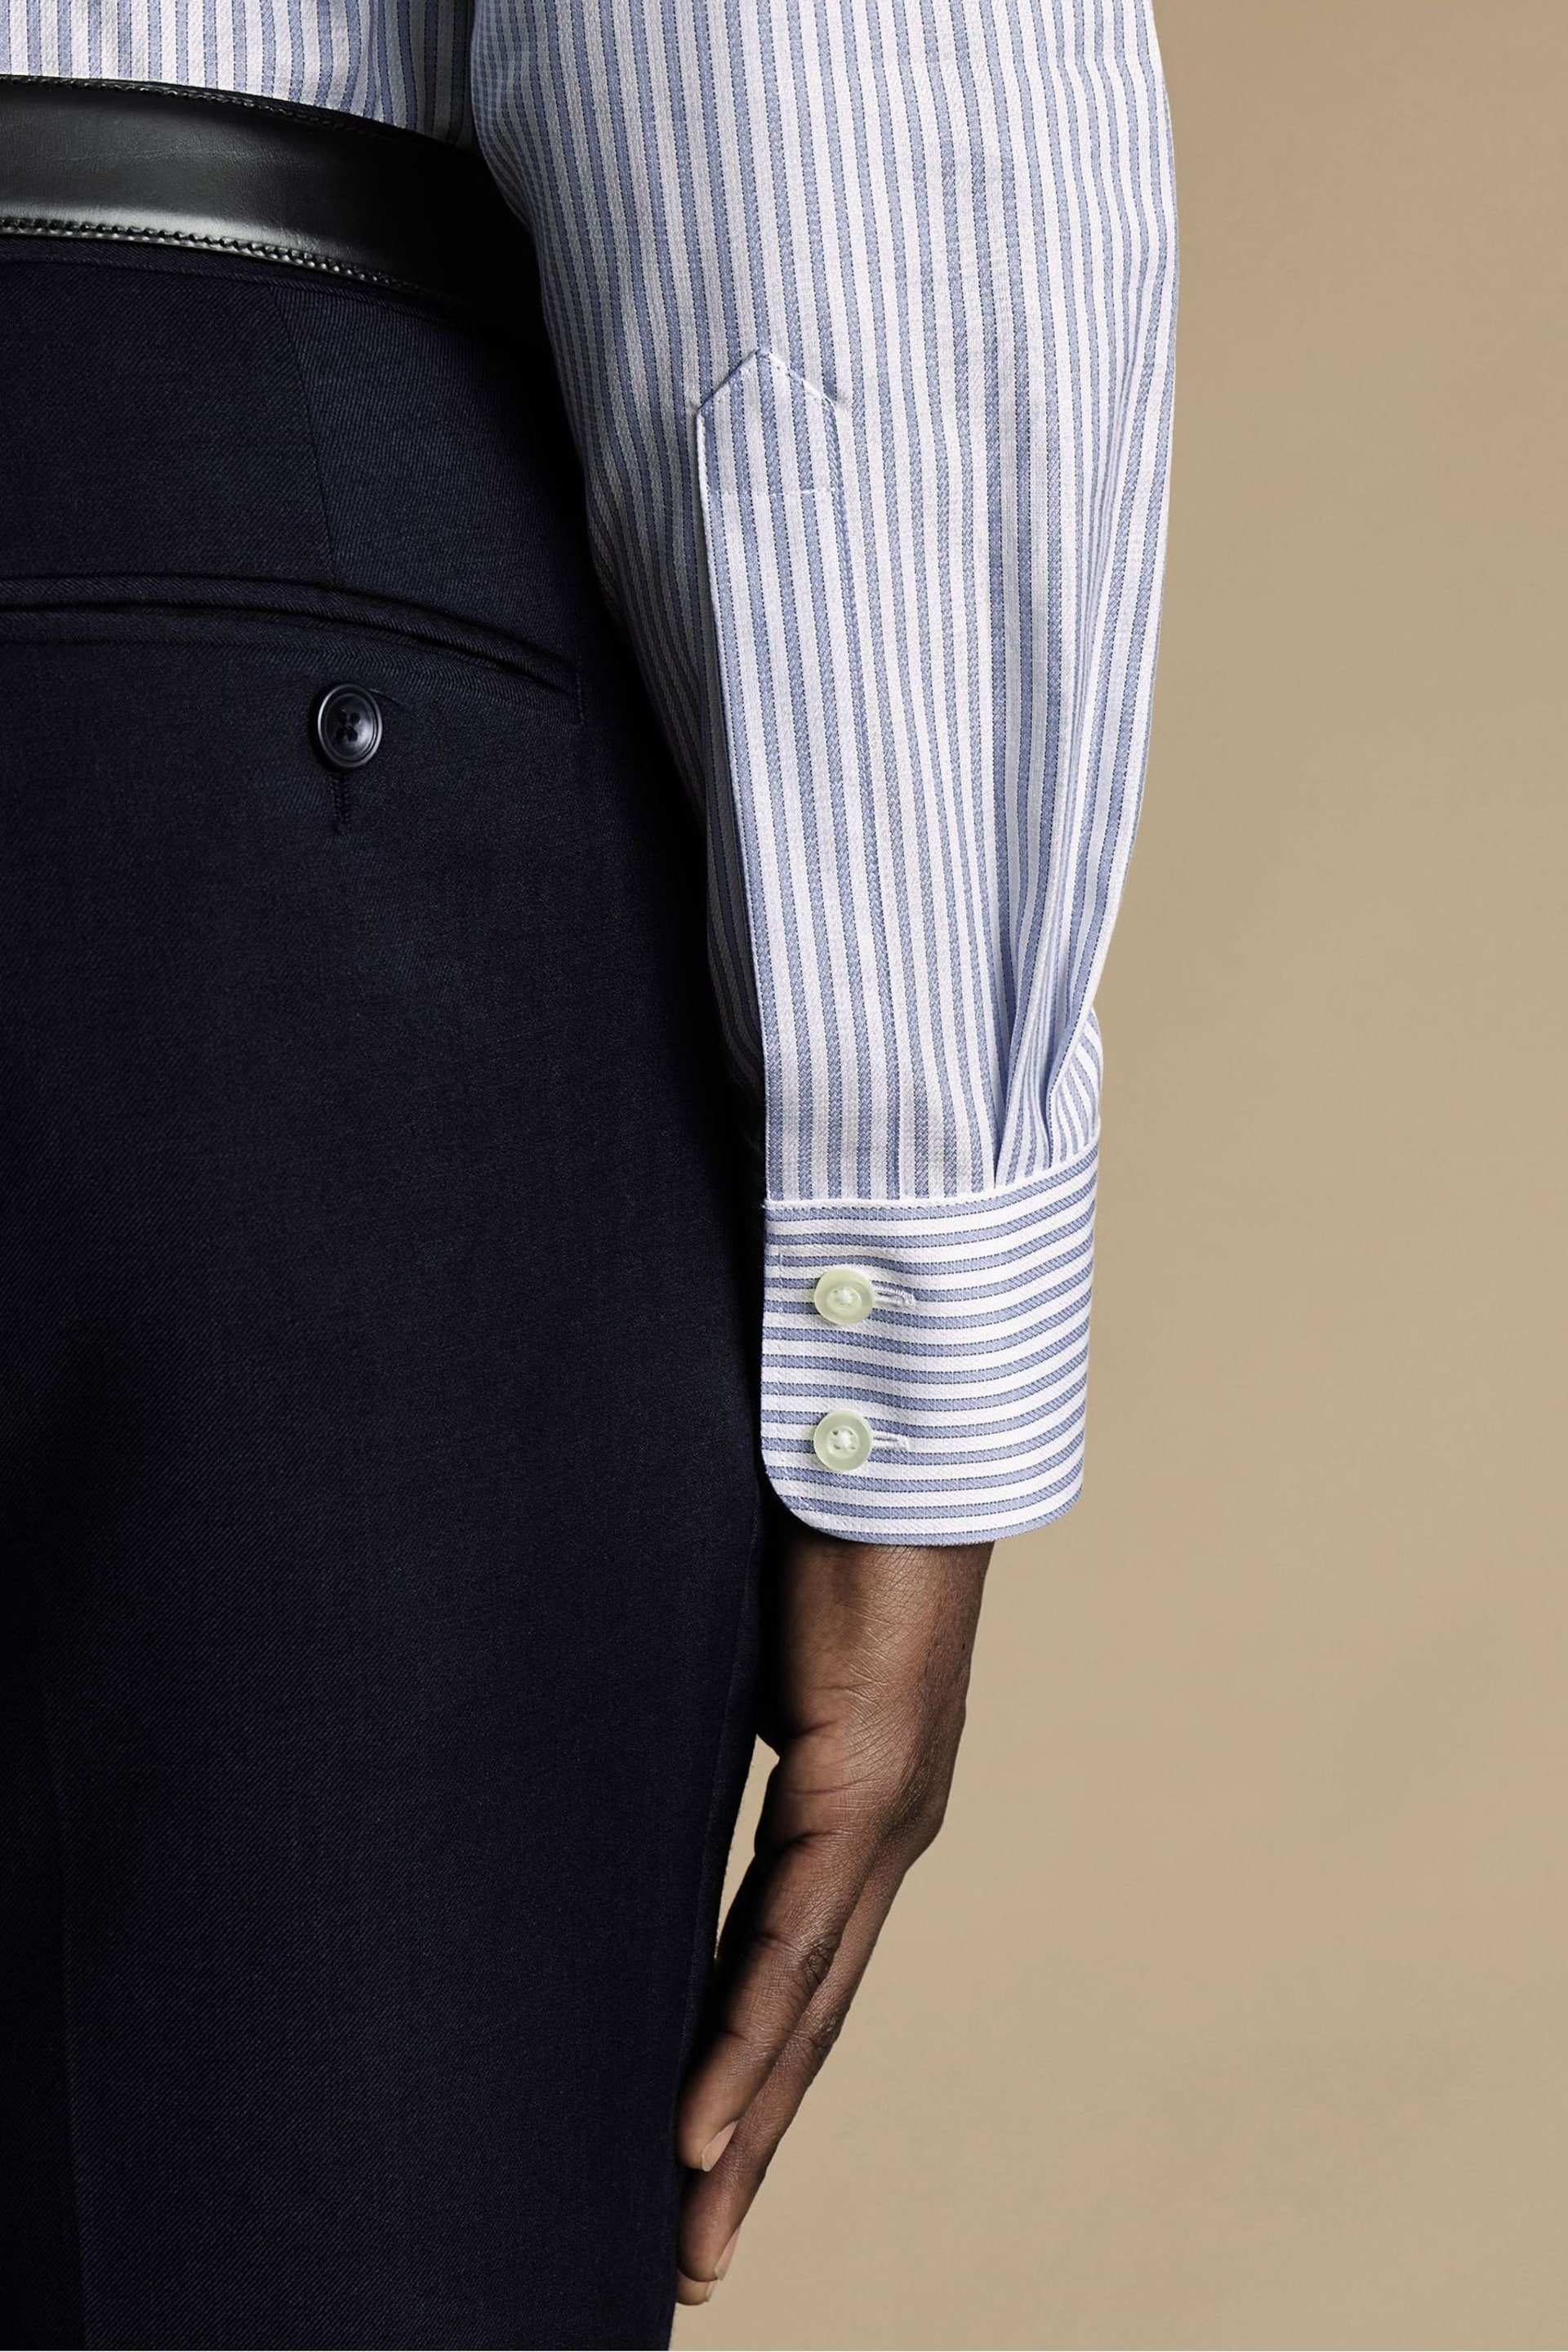 Charles Tyrwhitt Blue Stripe Egyptian Cotton Slim Fit Shirt - Image 3 of 6